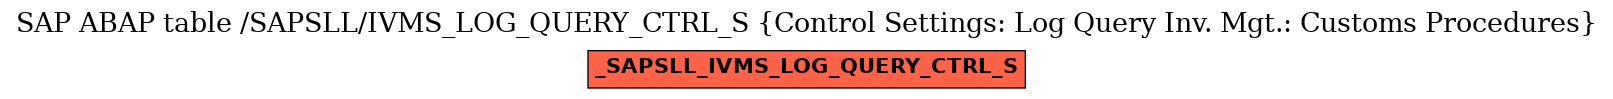 E-R Diagram for table /SAPSLL/IVMS_LOG_QUERY_CTRL_S (Control Settings: Log Query Inv. Mgt.: Customs Procedures)